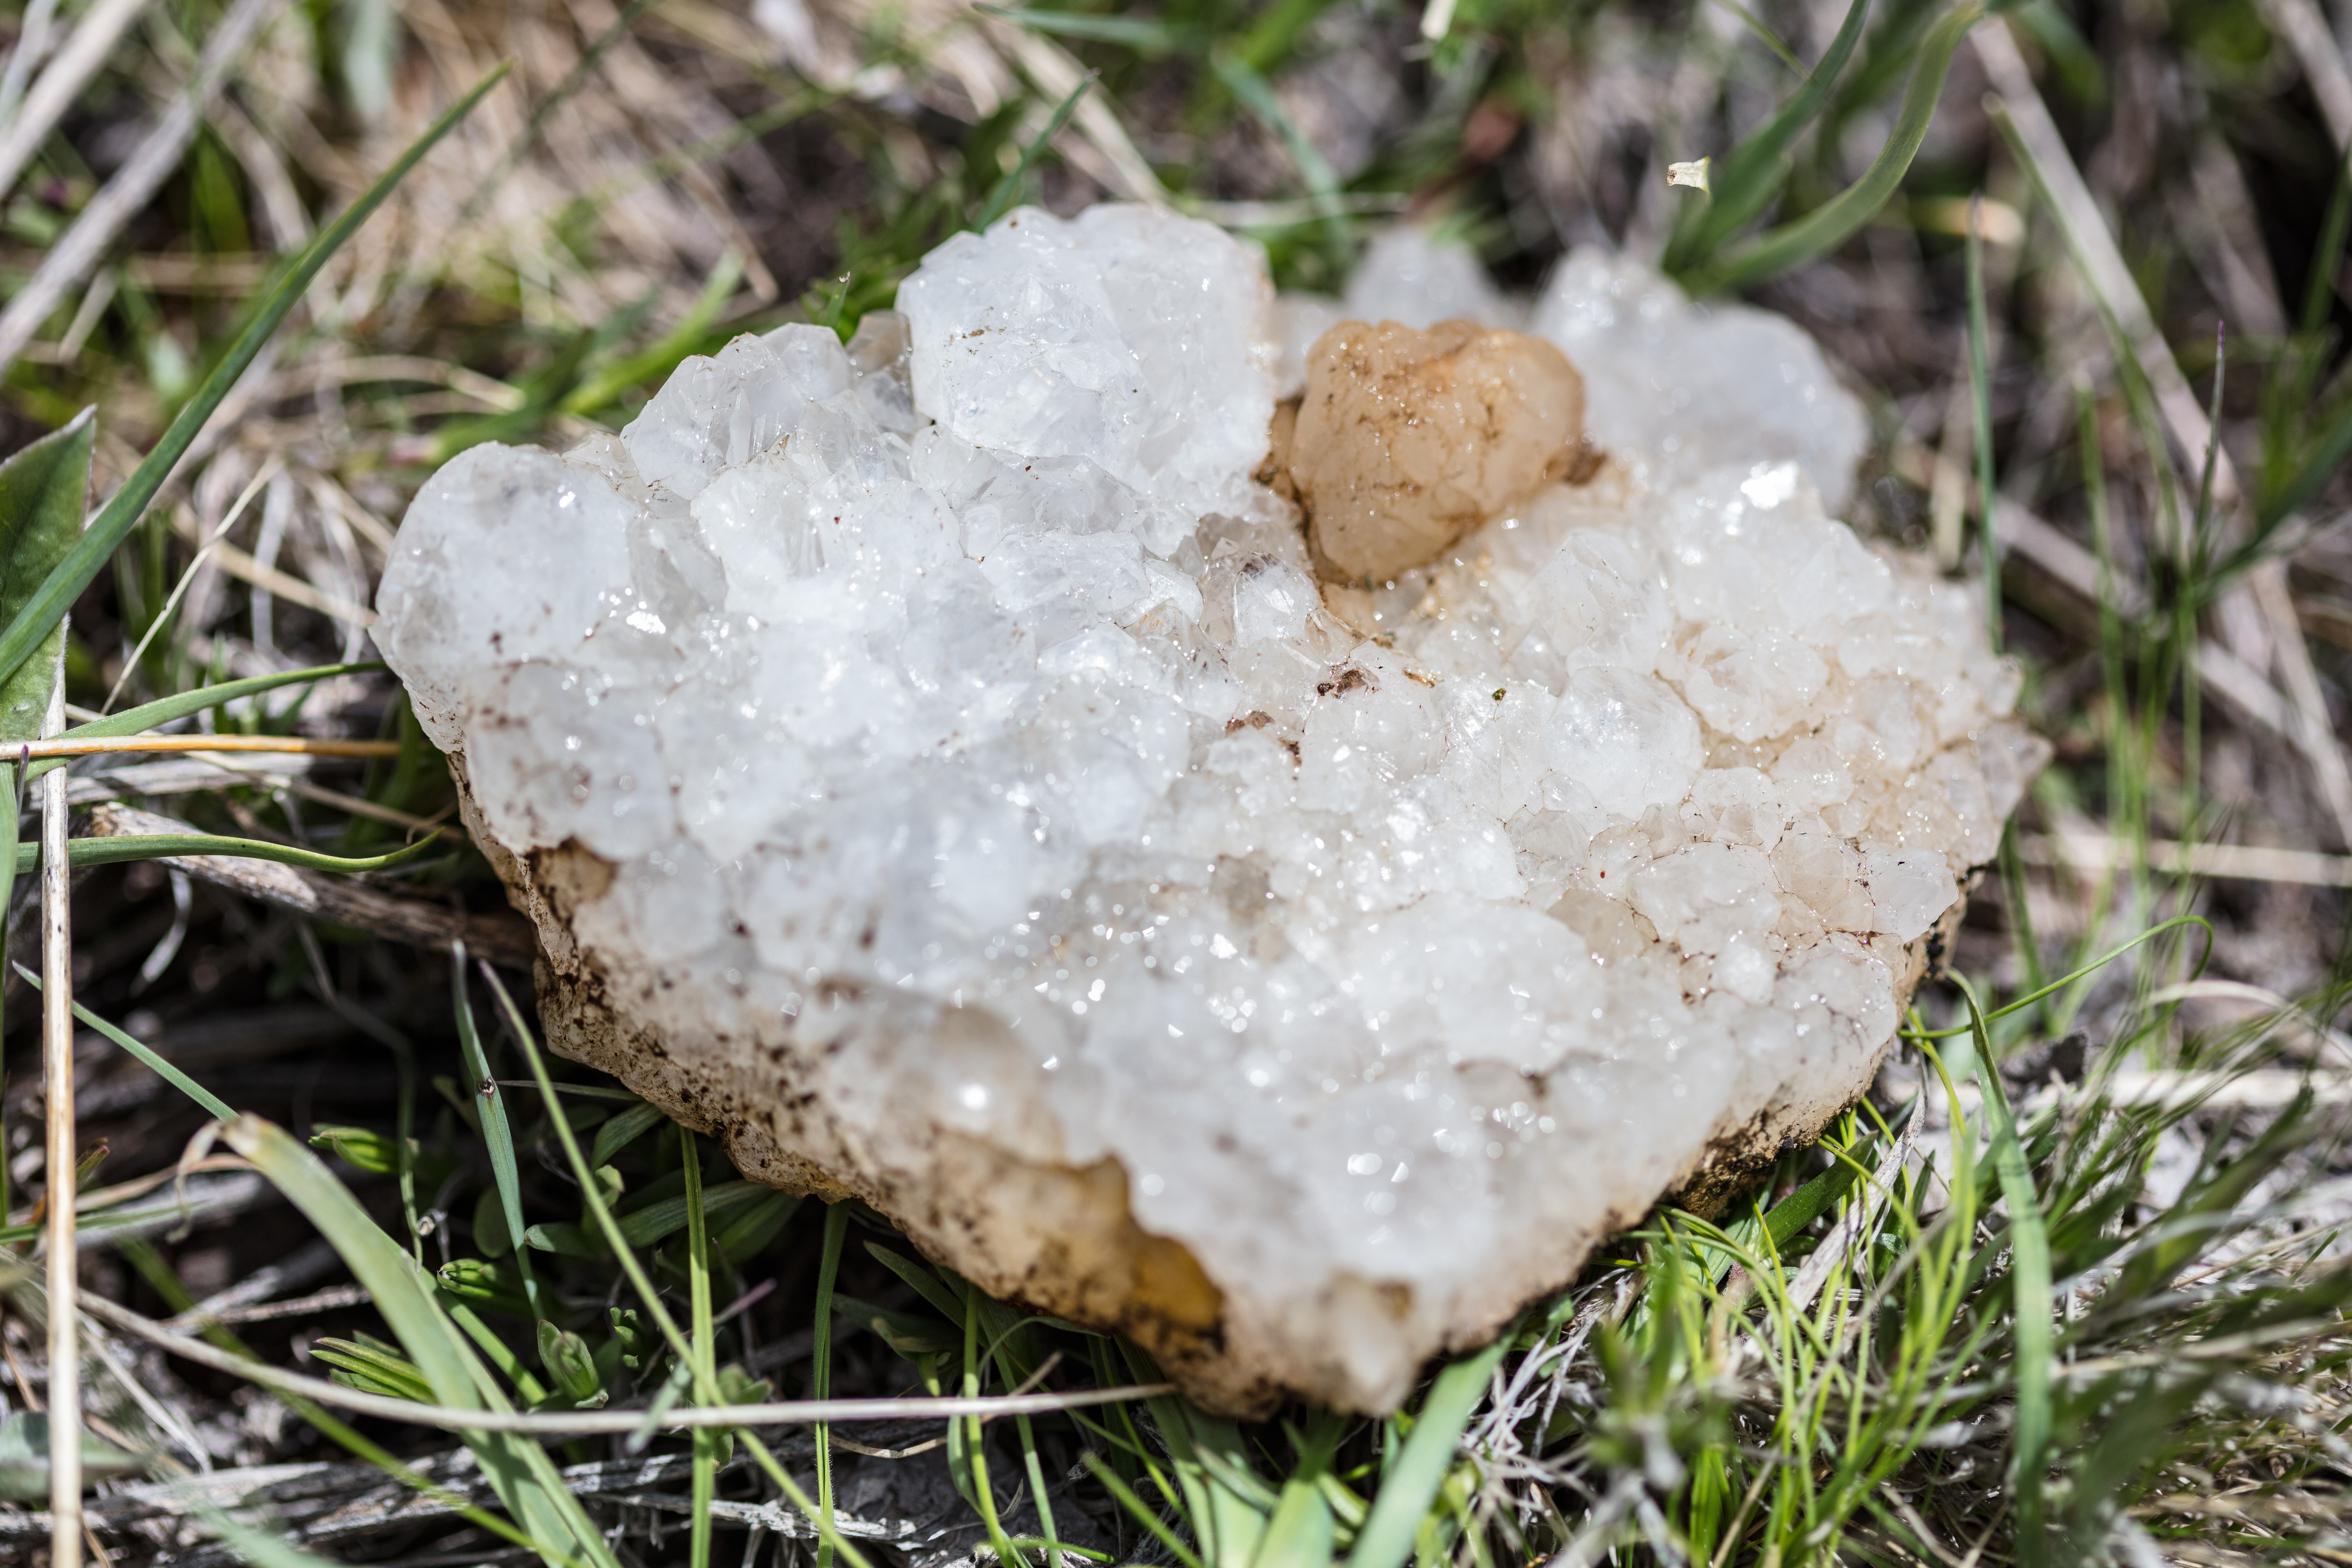 A rock of quartz crystals sitting in grass.